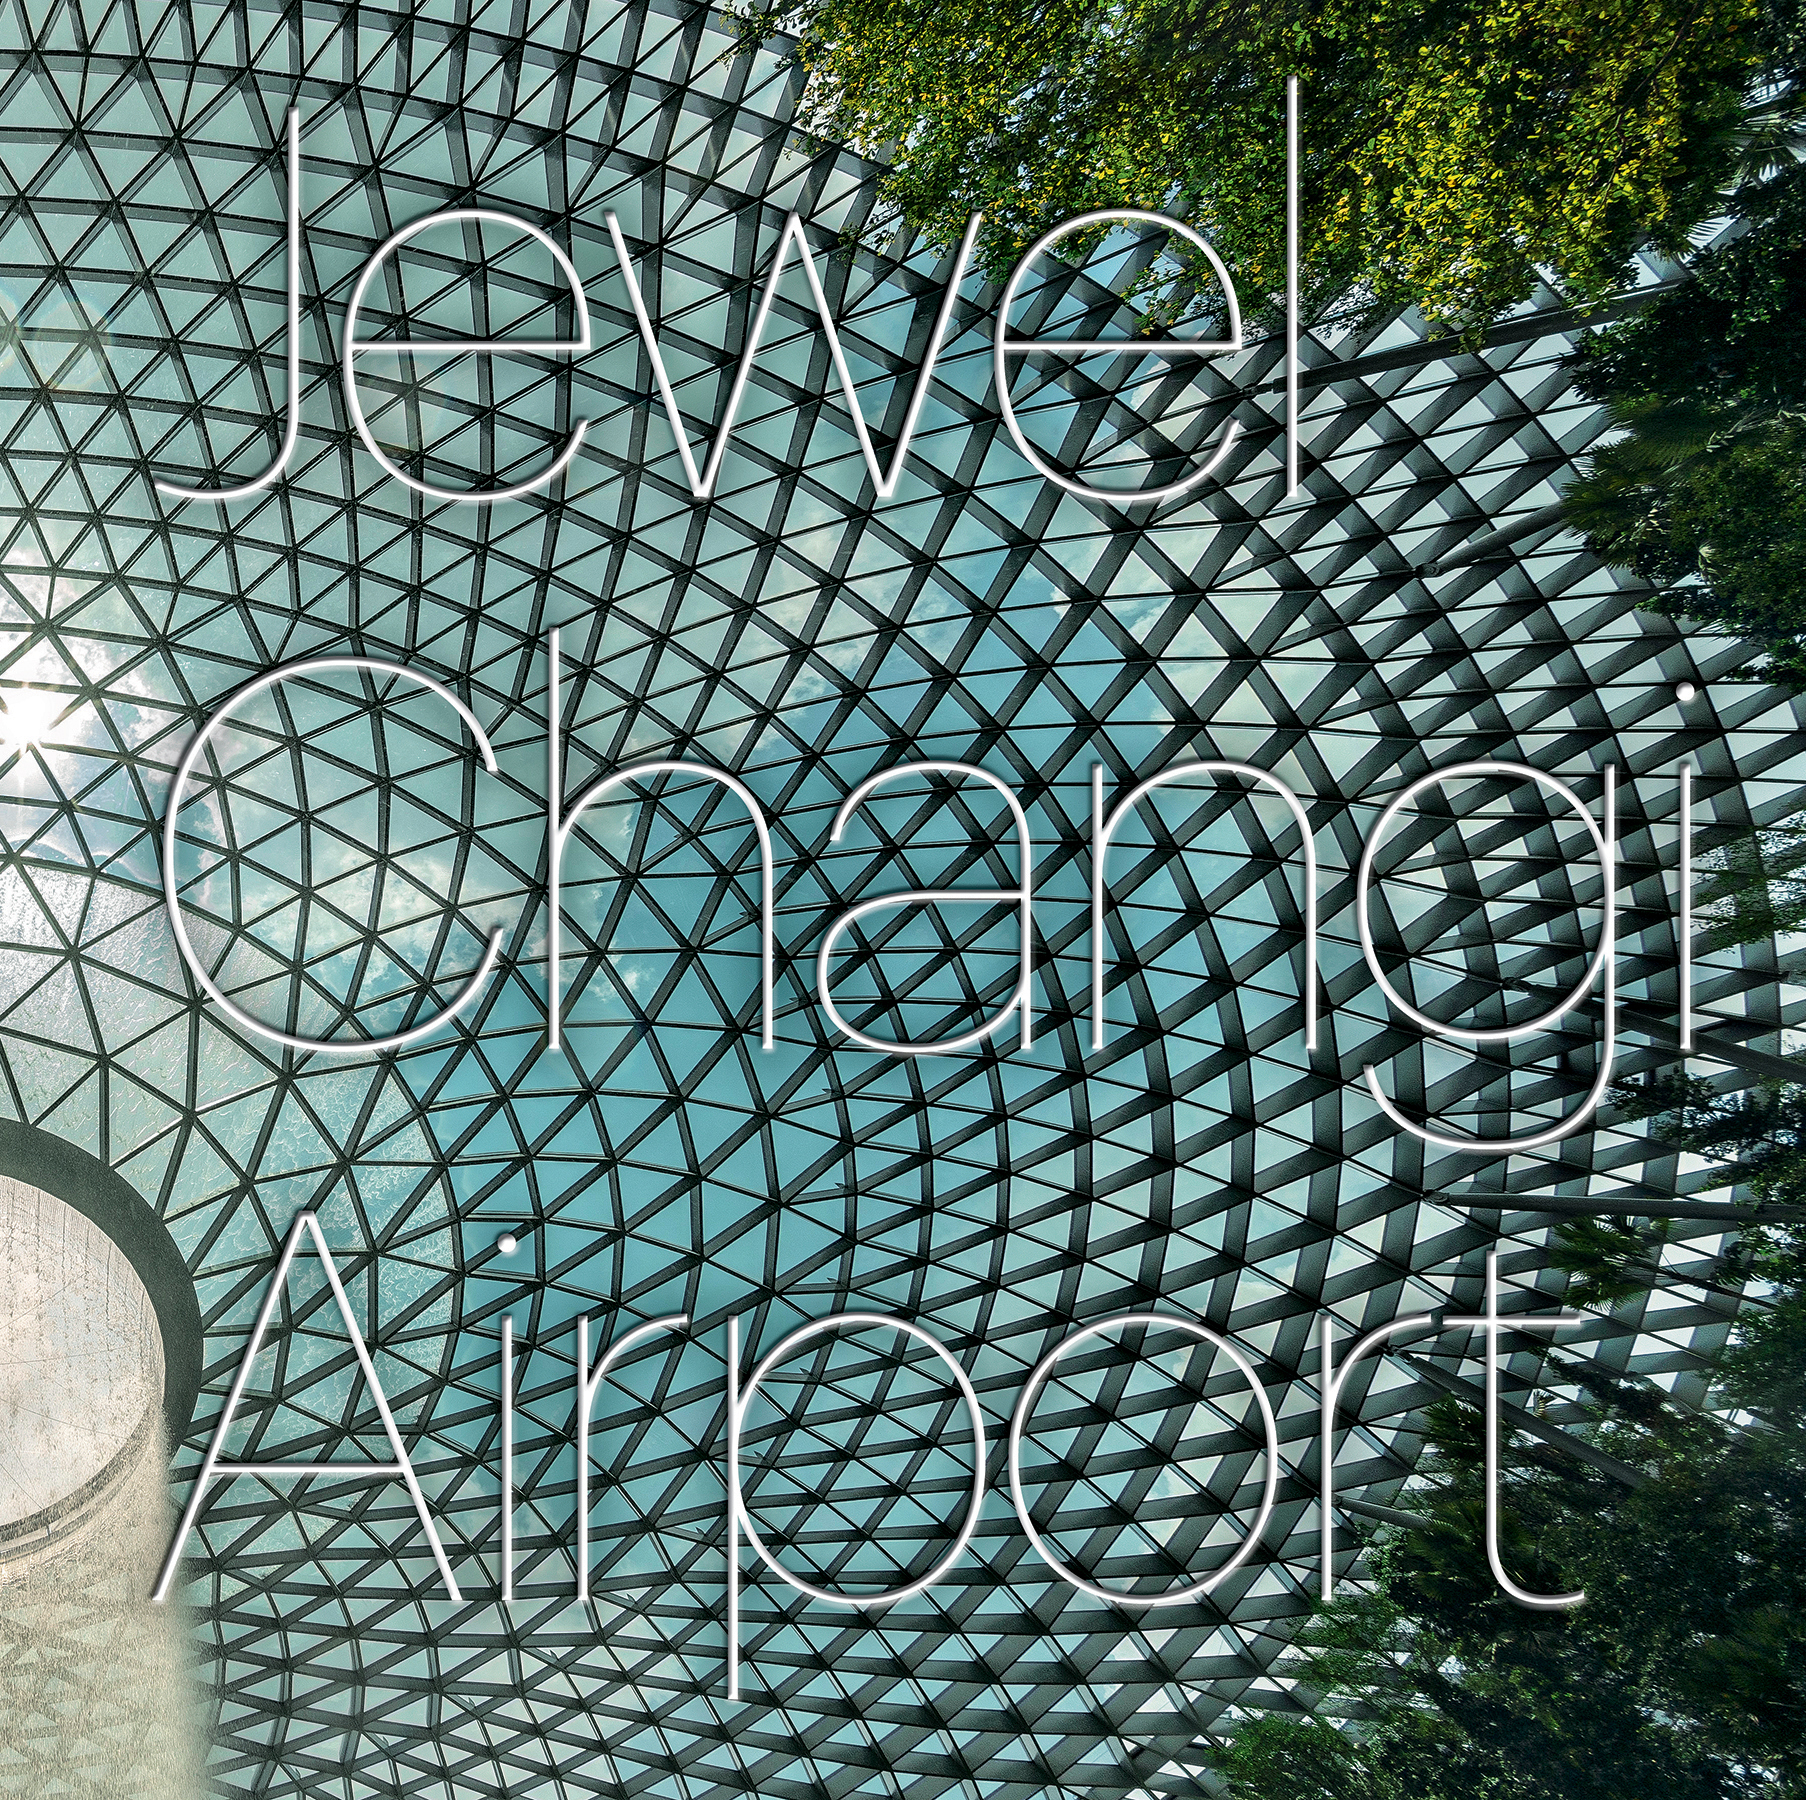 Moshe Safdie Designs Singapore's Jewel Changi Airport As a Destination  Garden